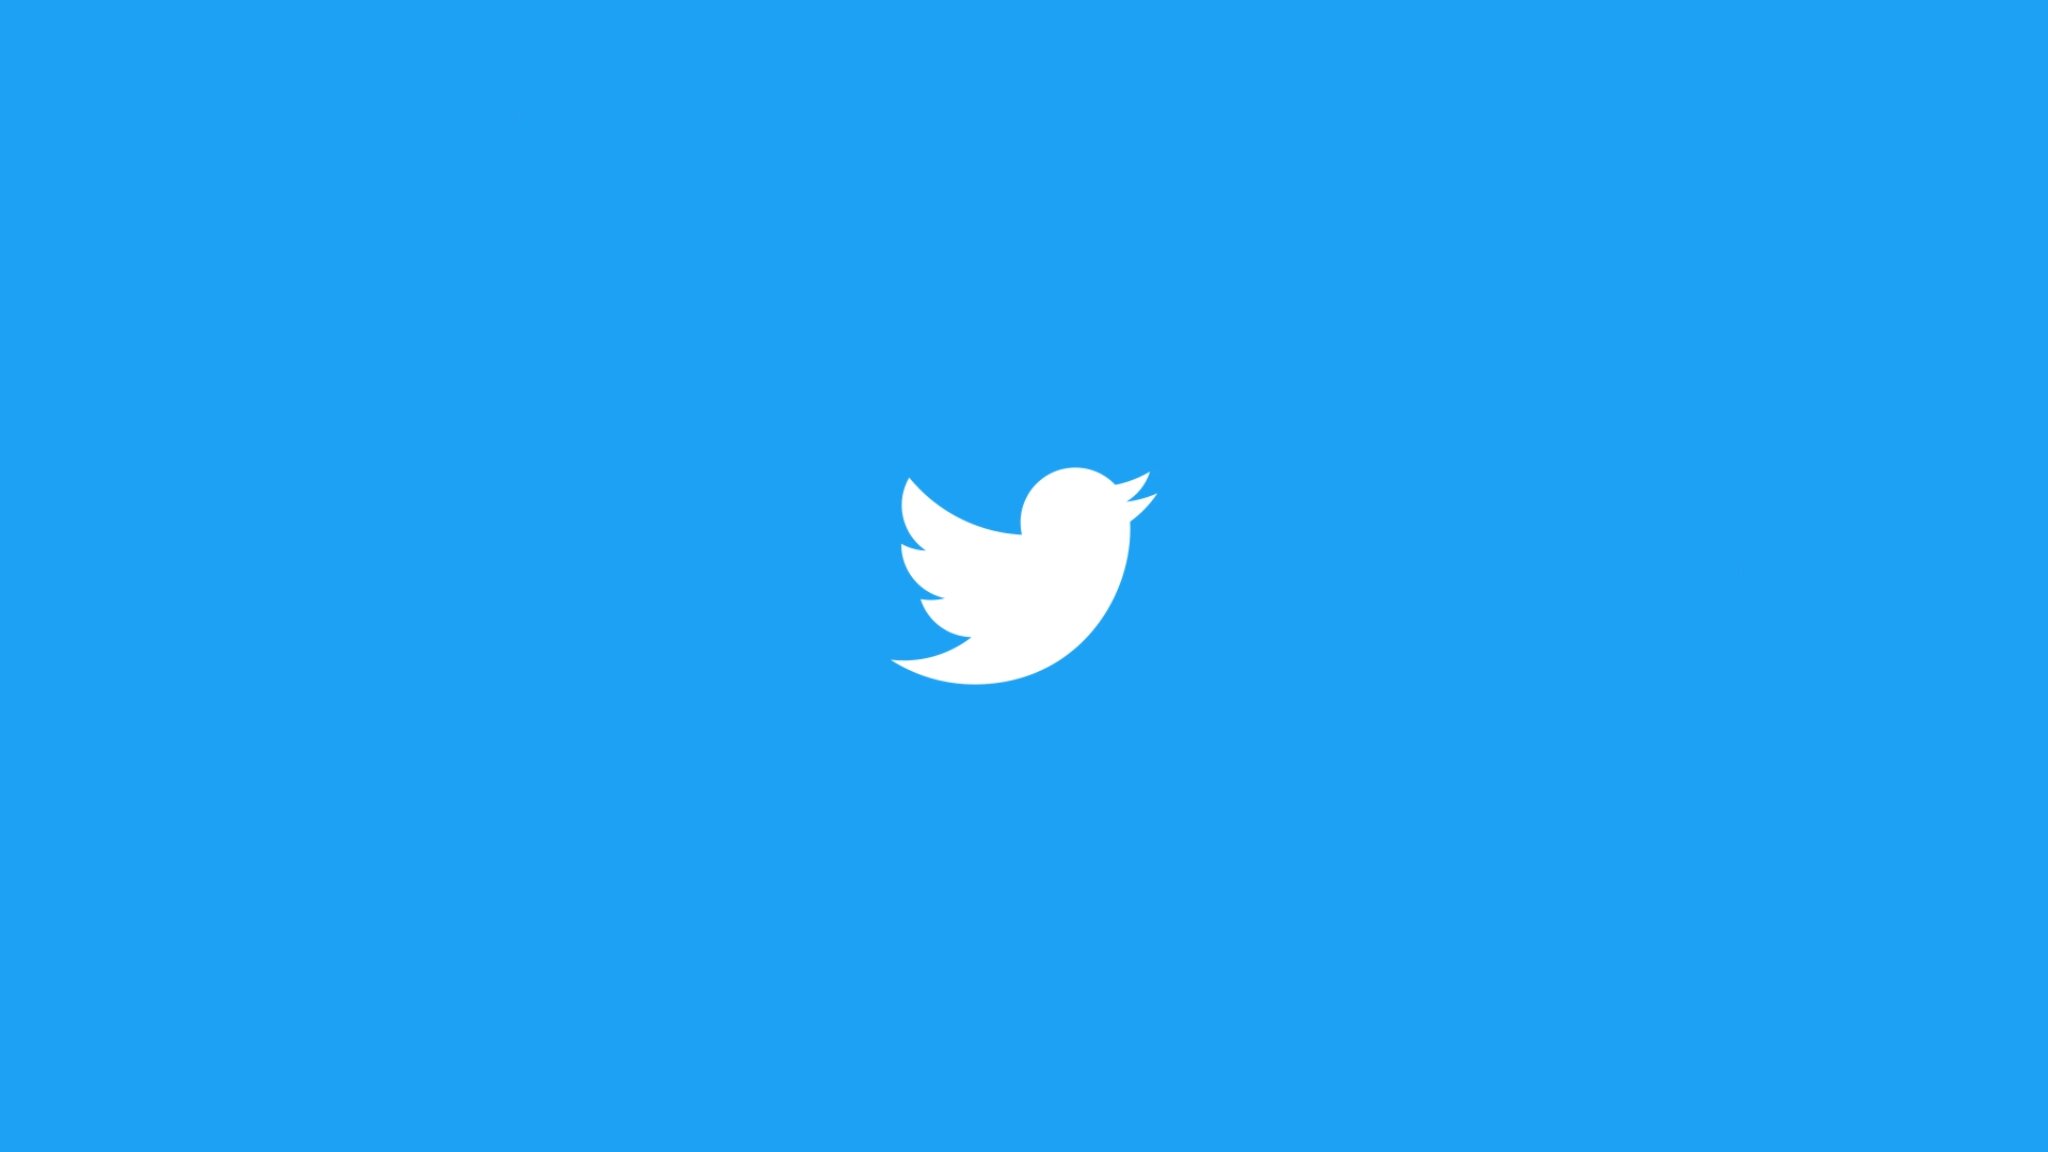 Le logo de twitter